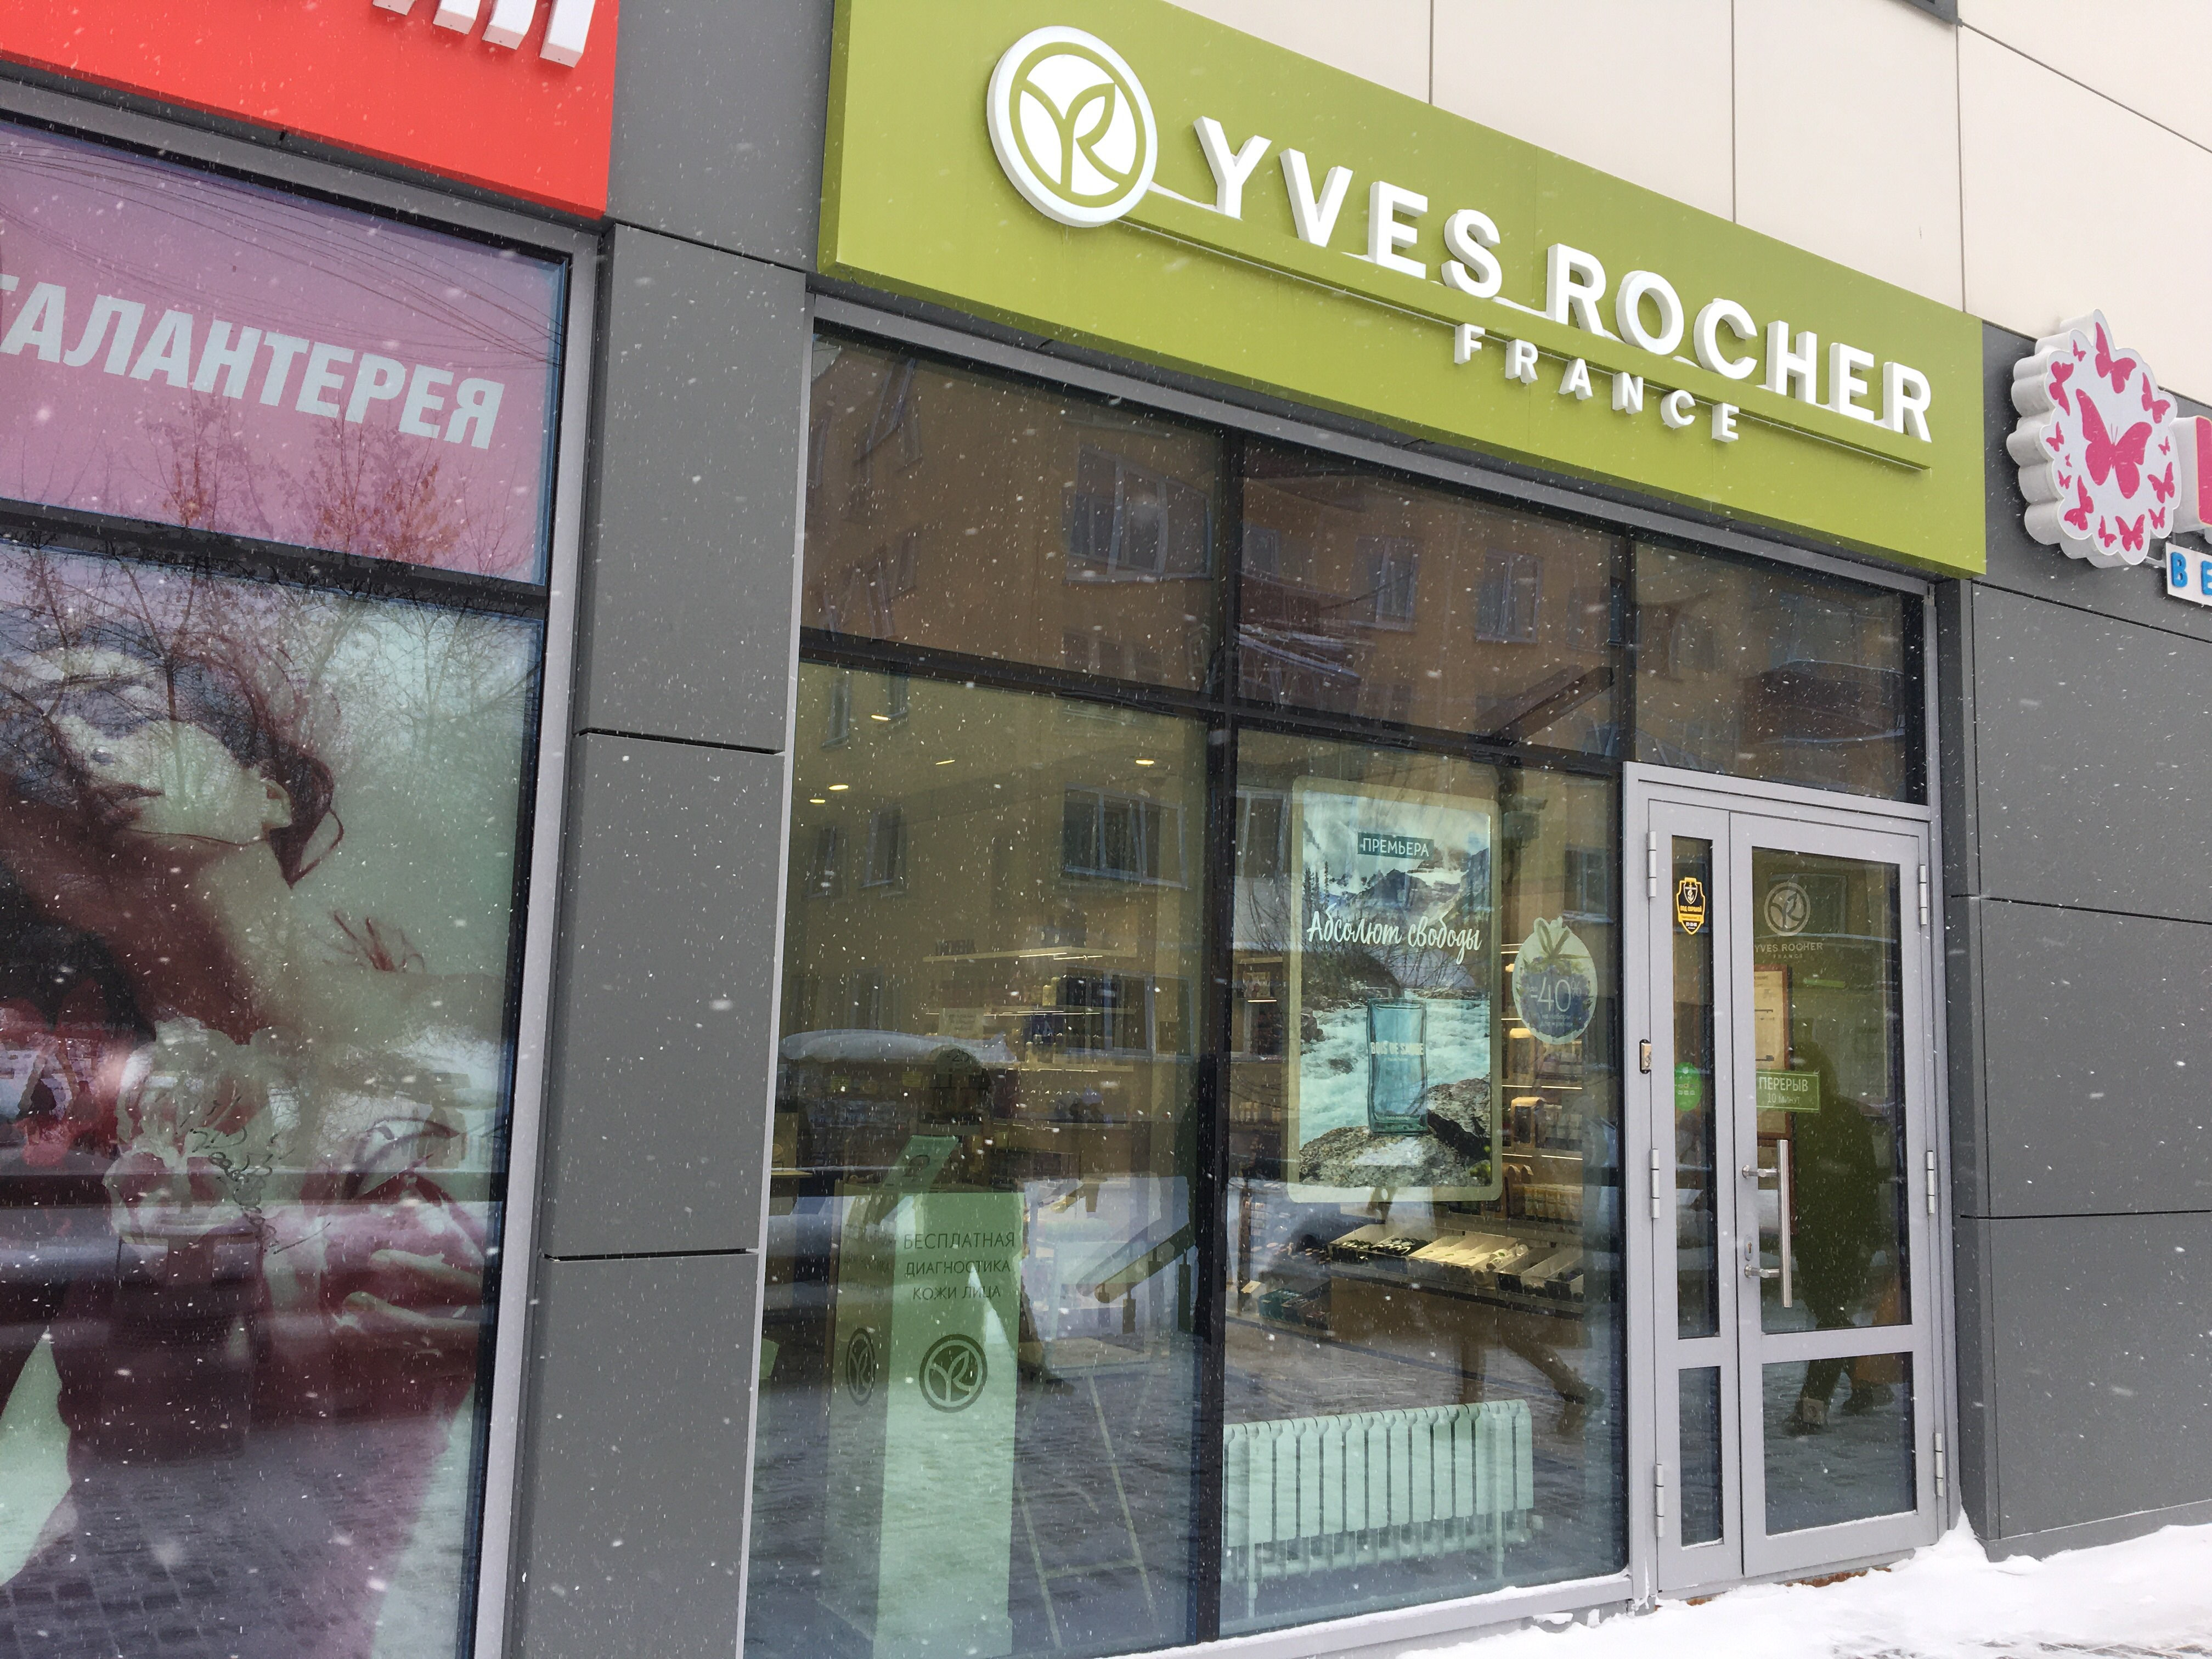 Yves Rocher Интернет Магазин Официальный Сайт Москва